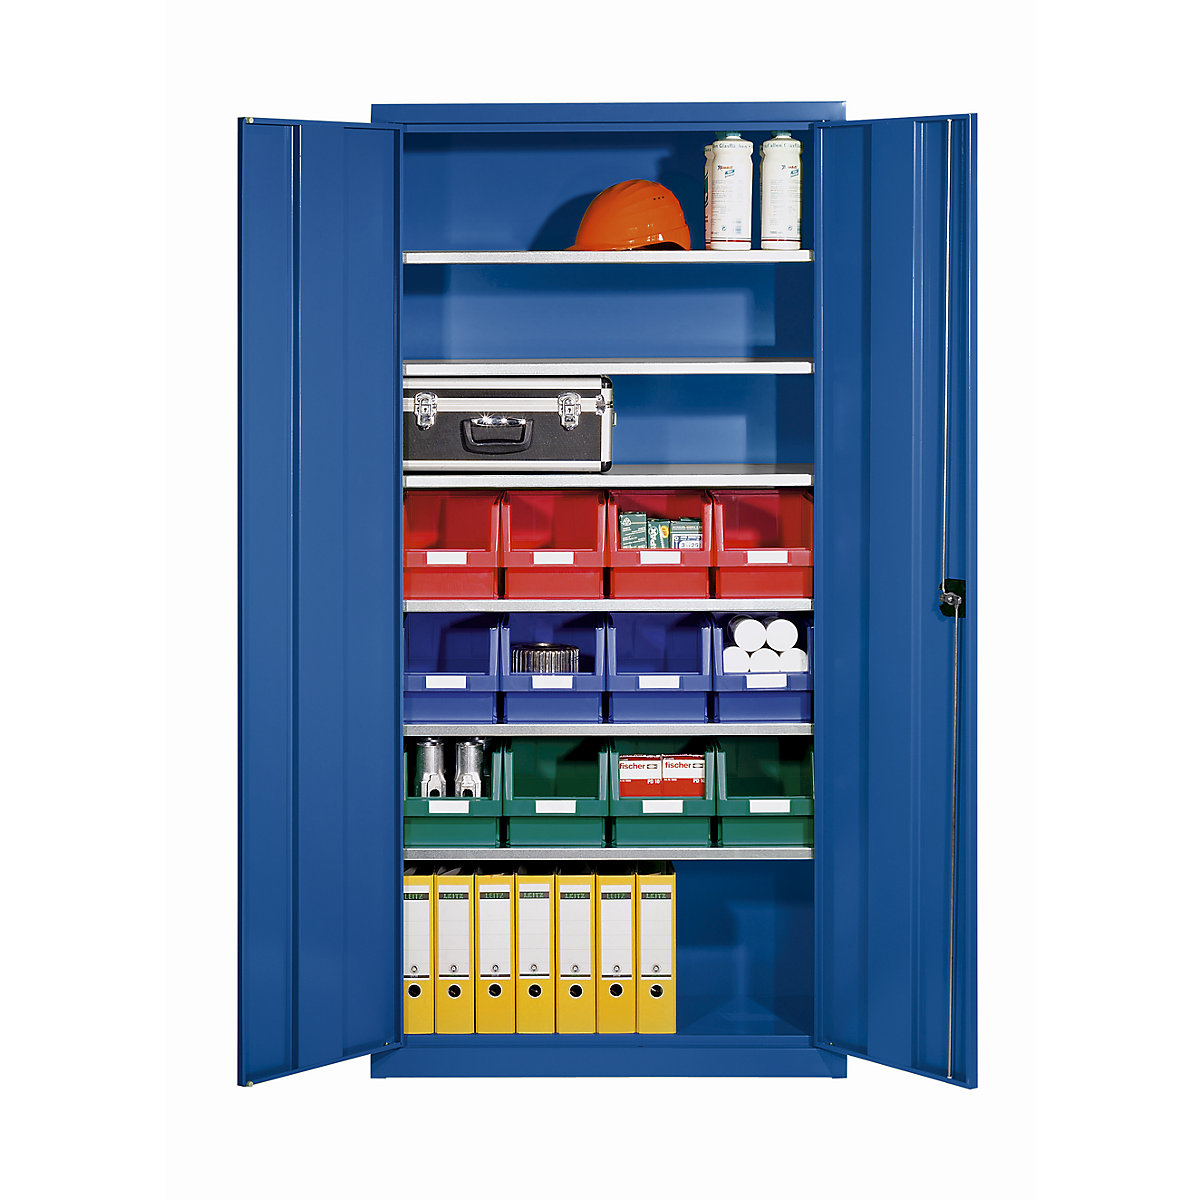 Storage cupboard made of sheet steel – eurokraft pro, with 12 open fronted storage bins, gentian blue RAL 5010-4